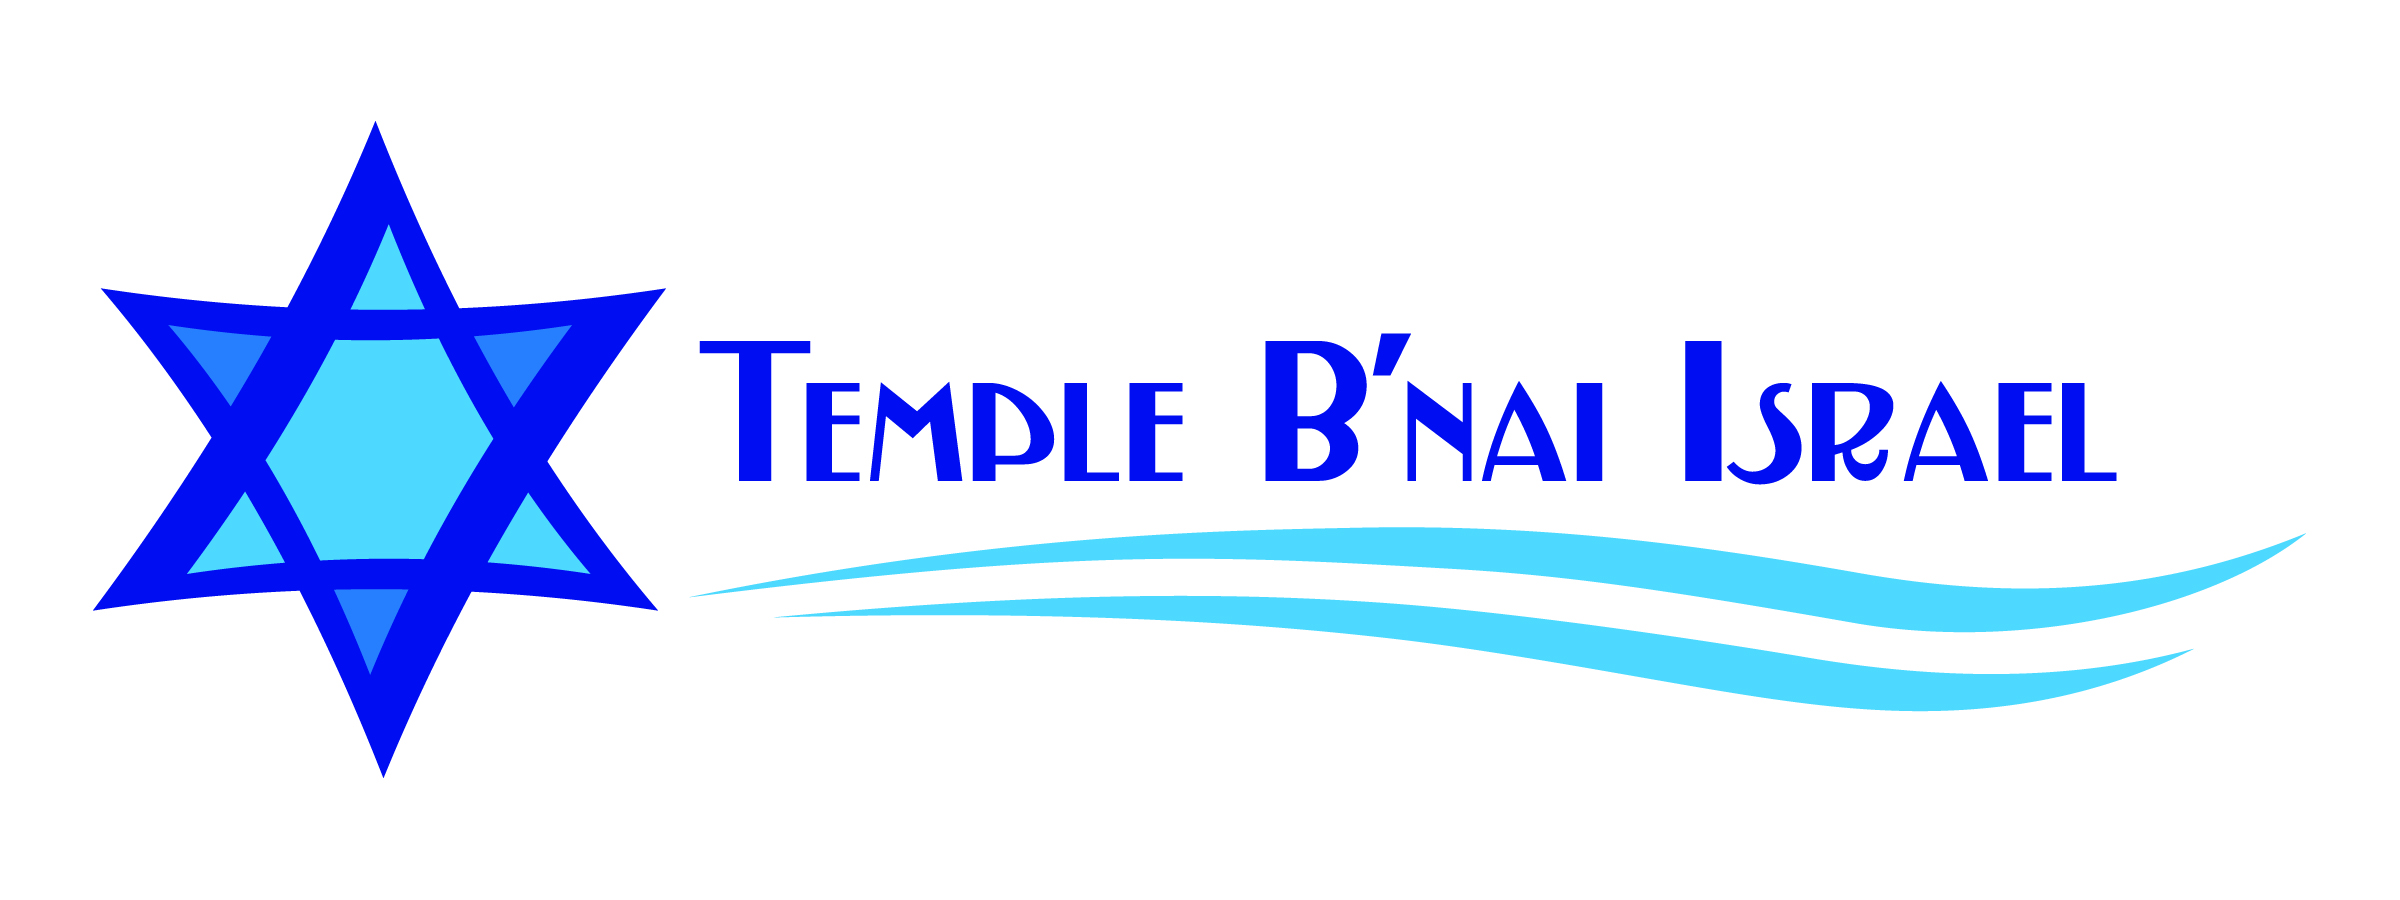 Temple B'nai Israel, Panama City, FL